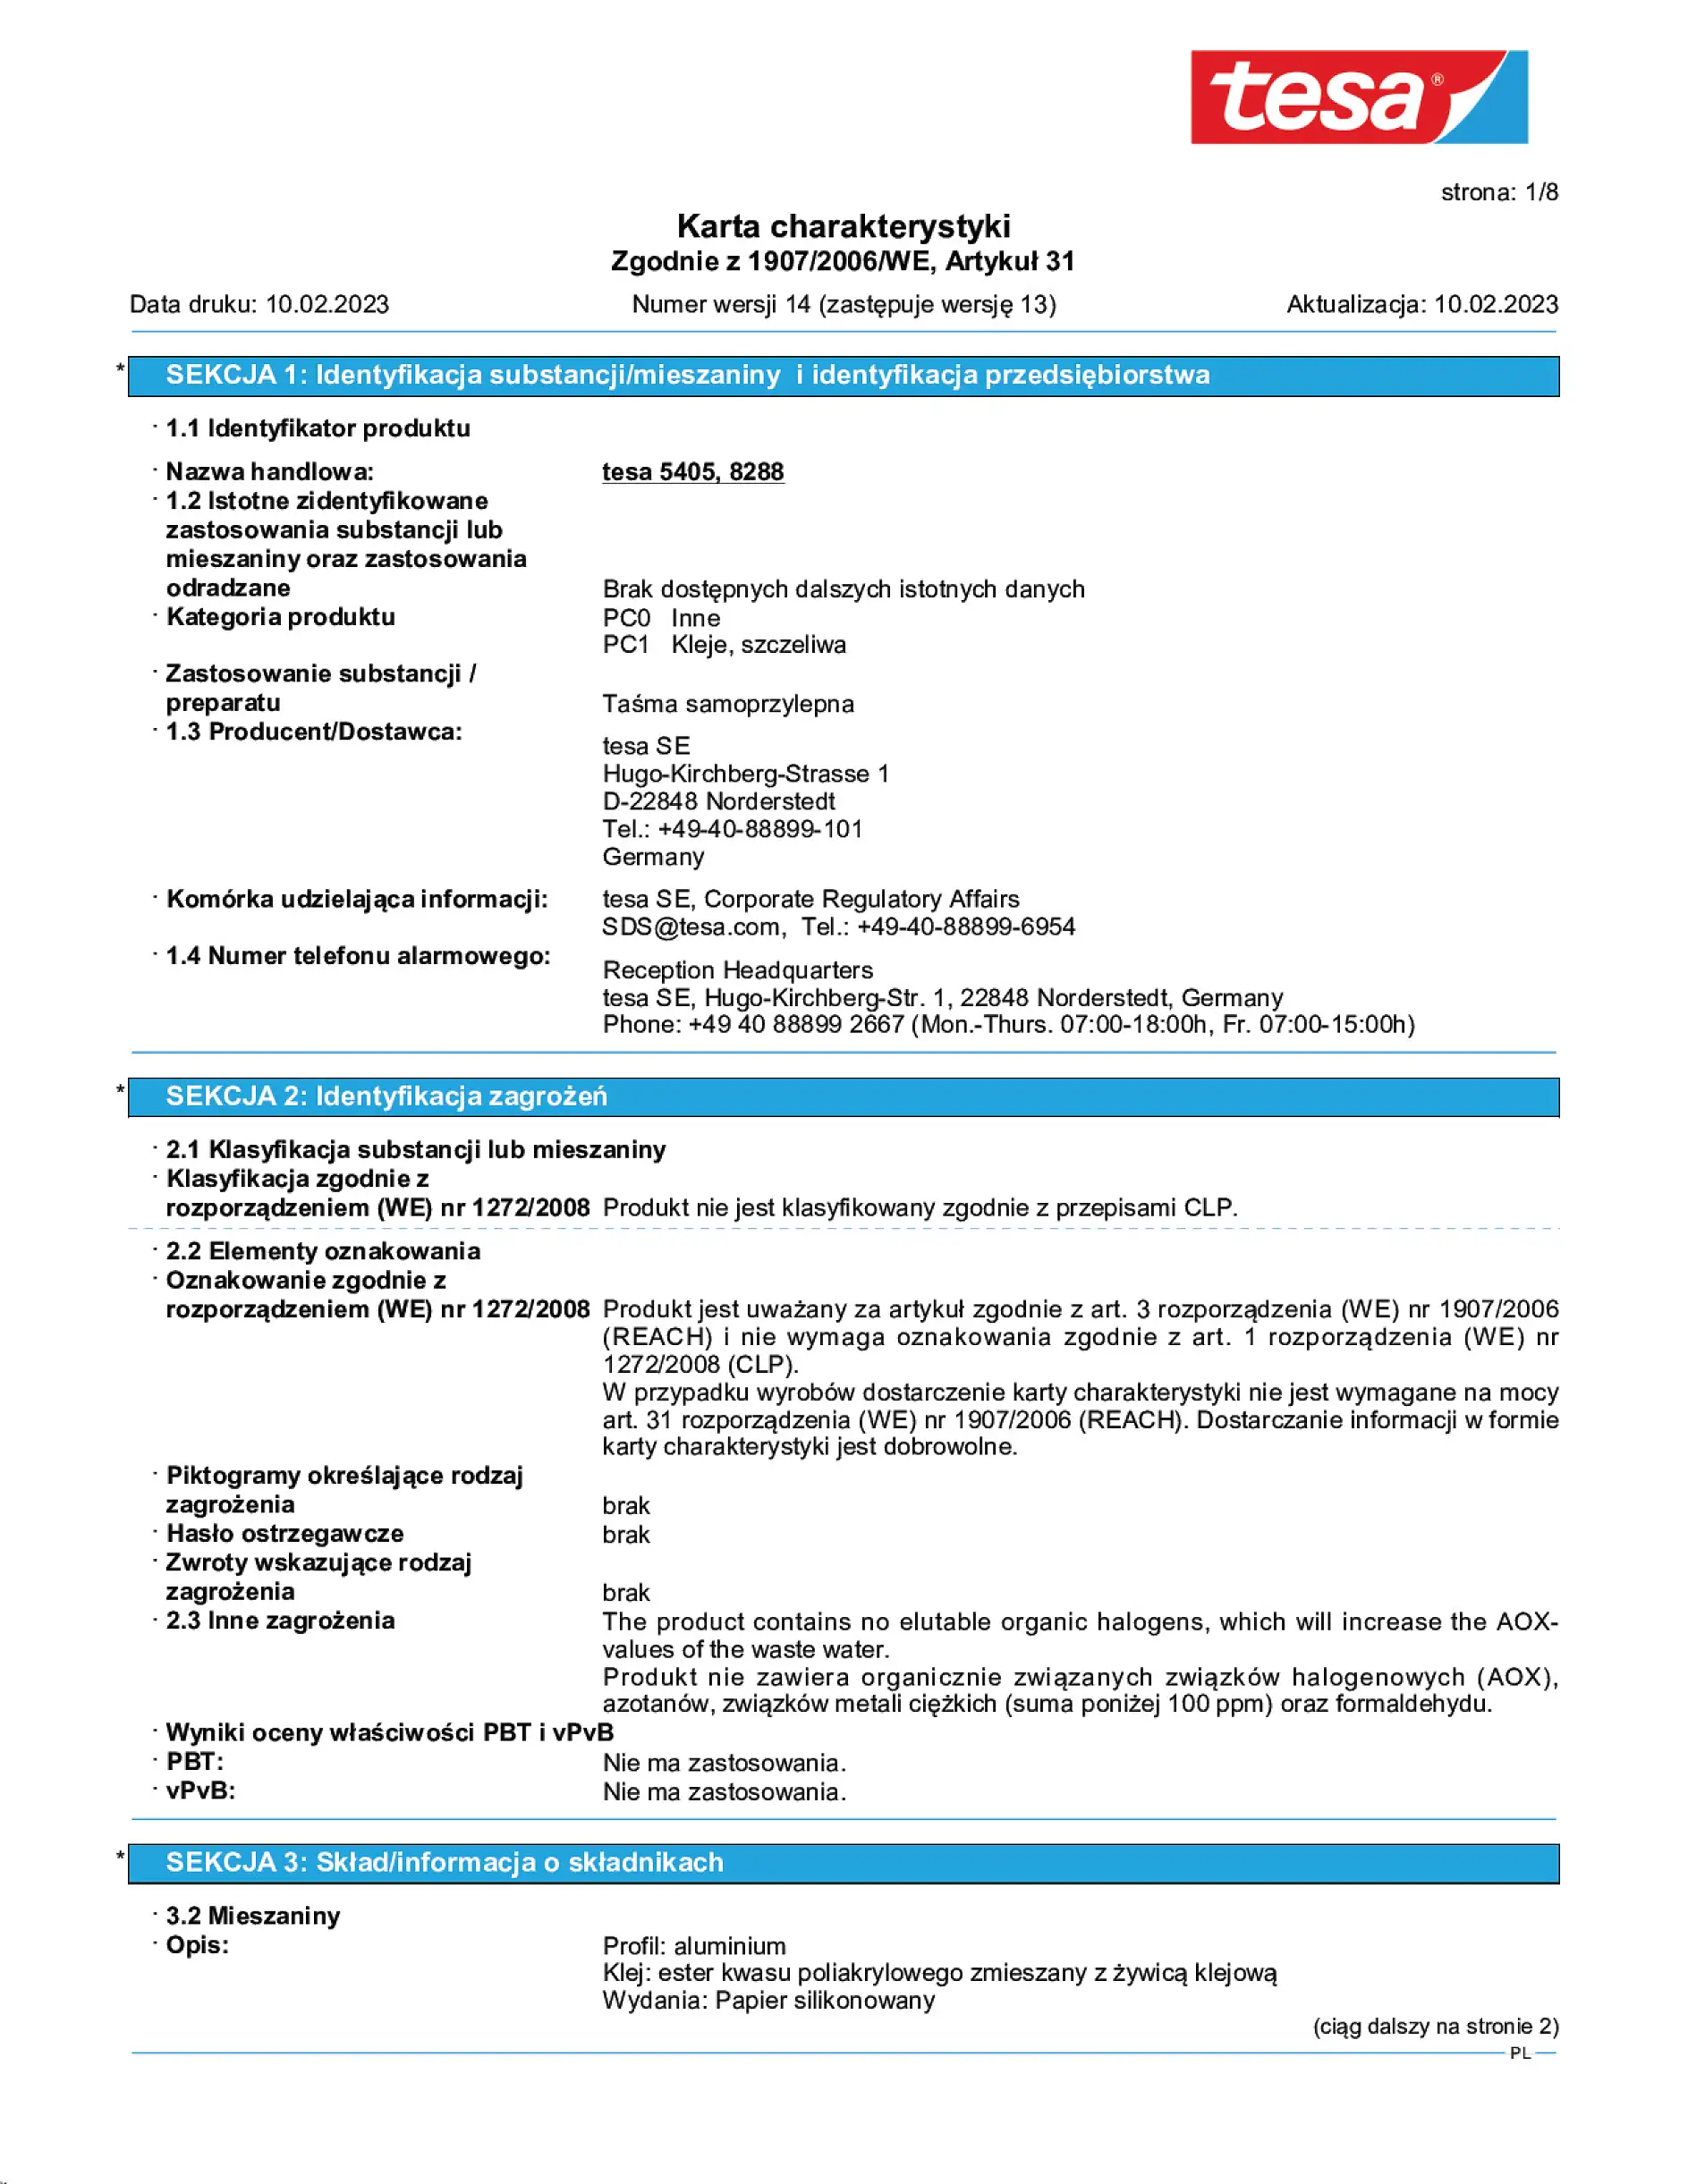 Safety data sheet_tesamoll® 05405_pl-PL_v14